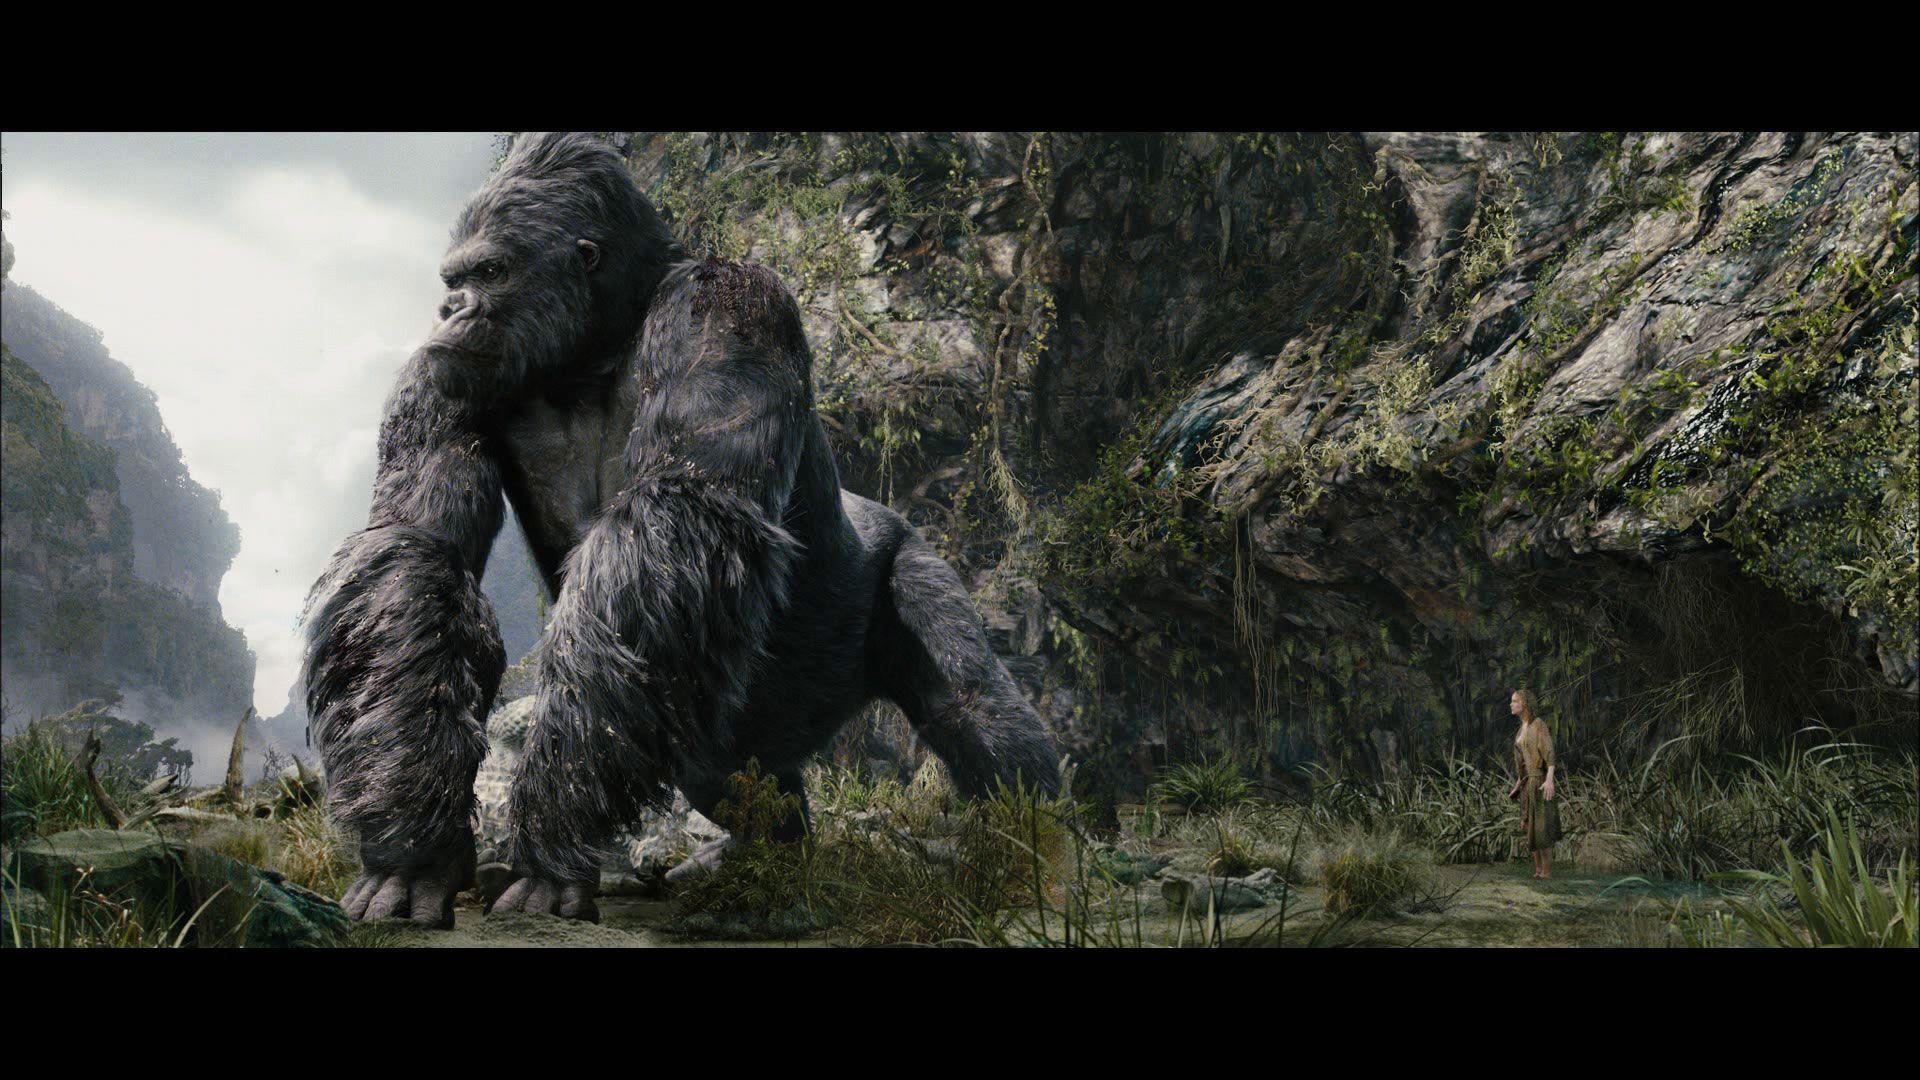 King Kong (Character)